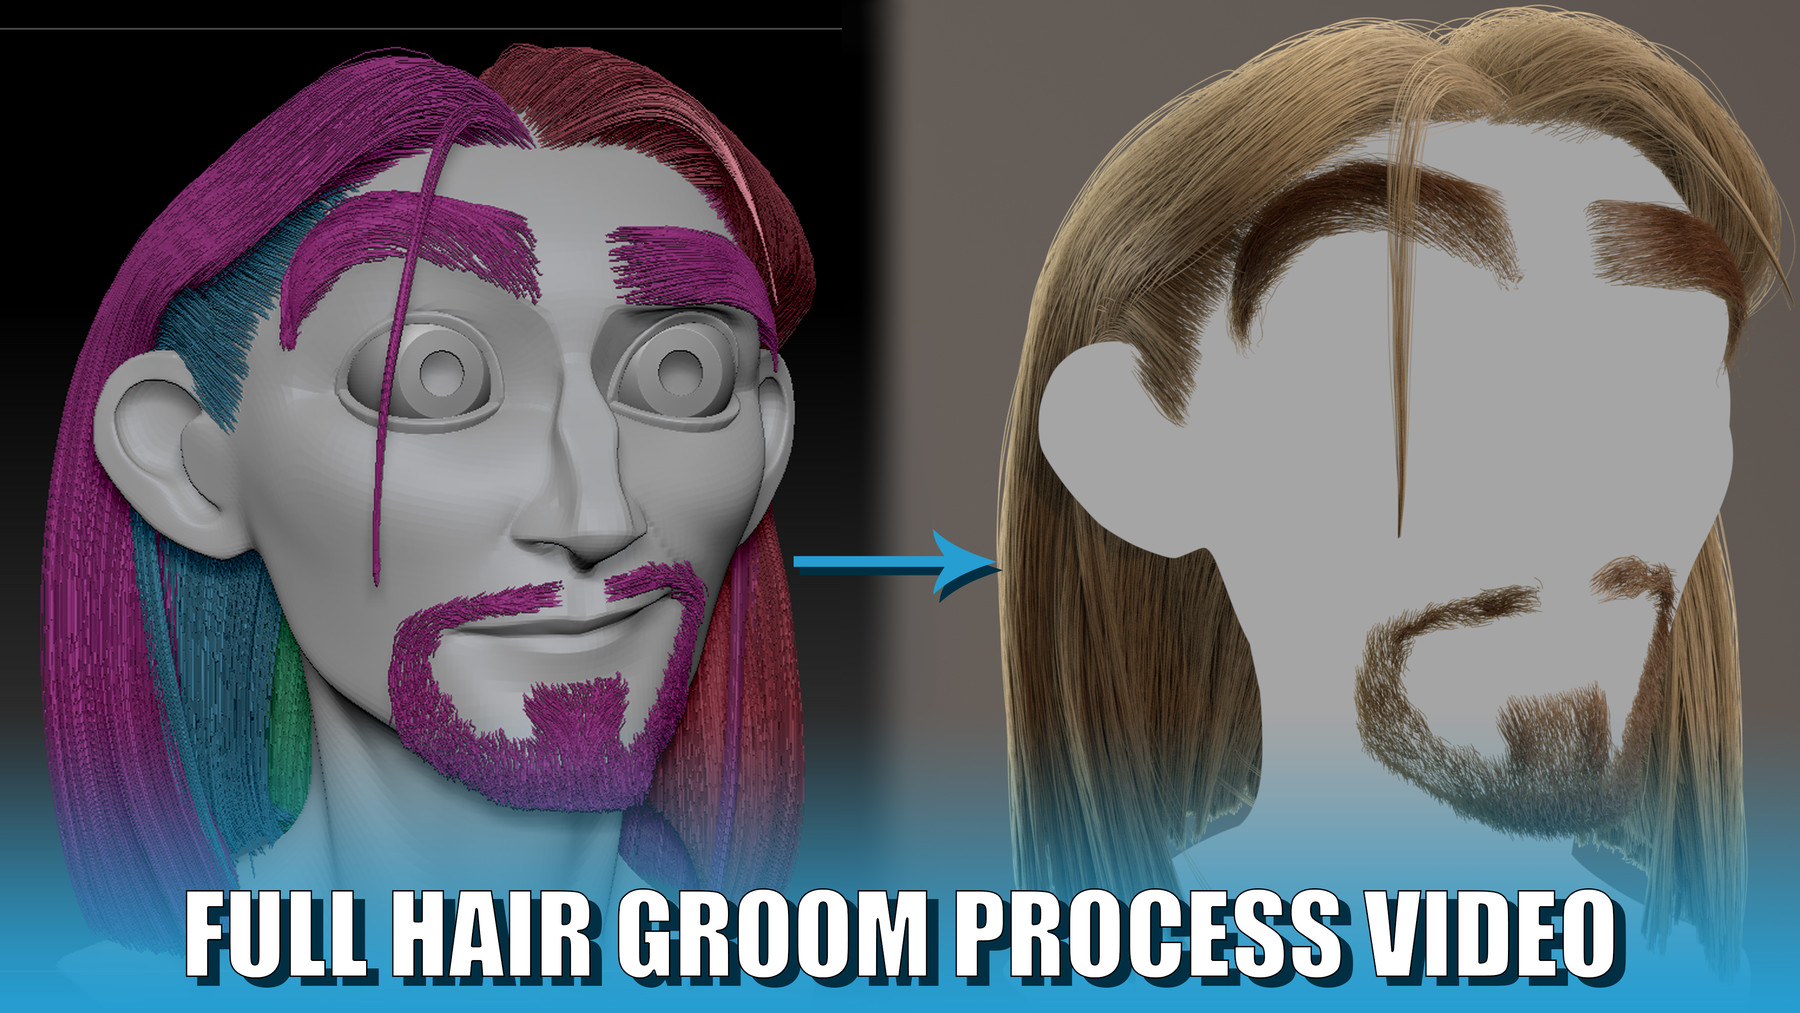 Alberto LH - Cartoon character Full Hair Groom Fibermesh to Xgen (Full  process video hair, beard and eyebrows)